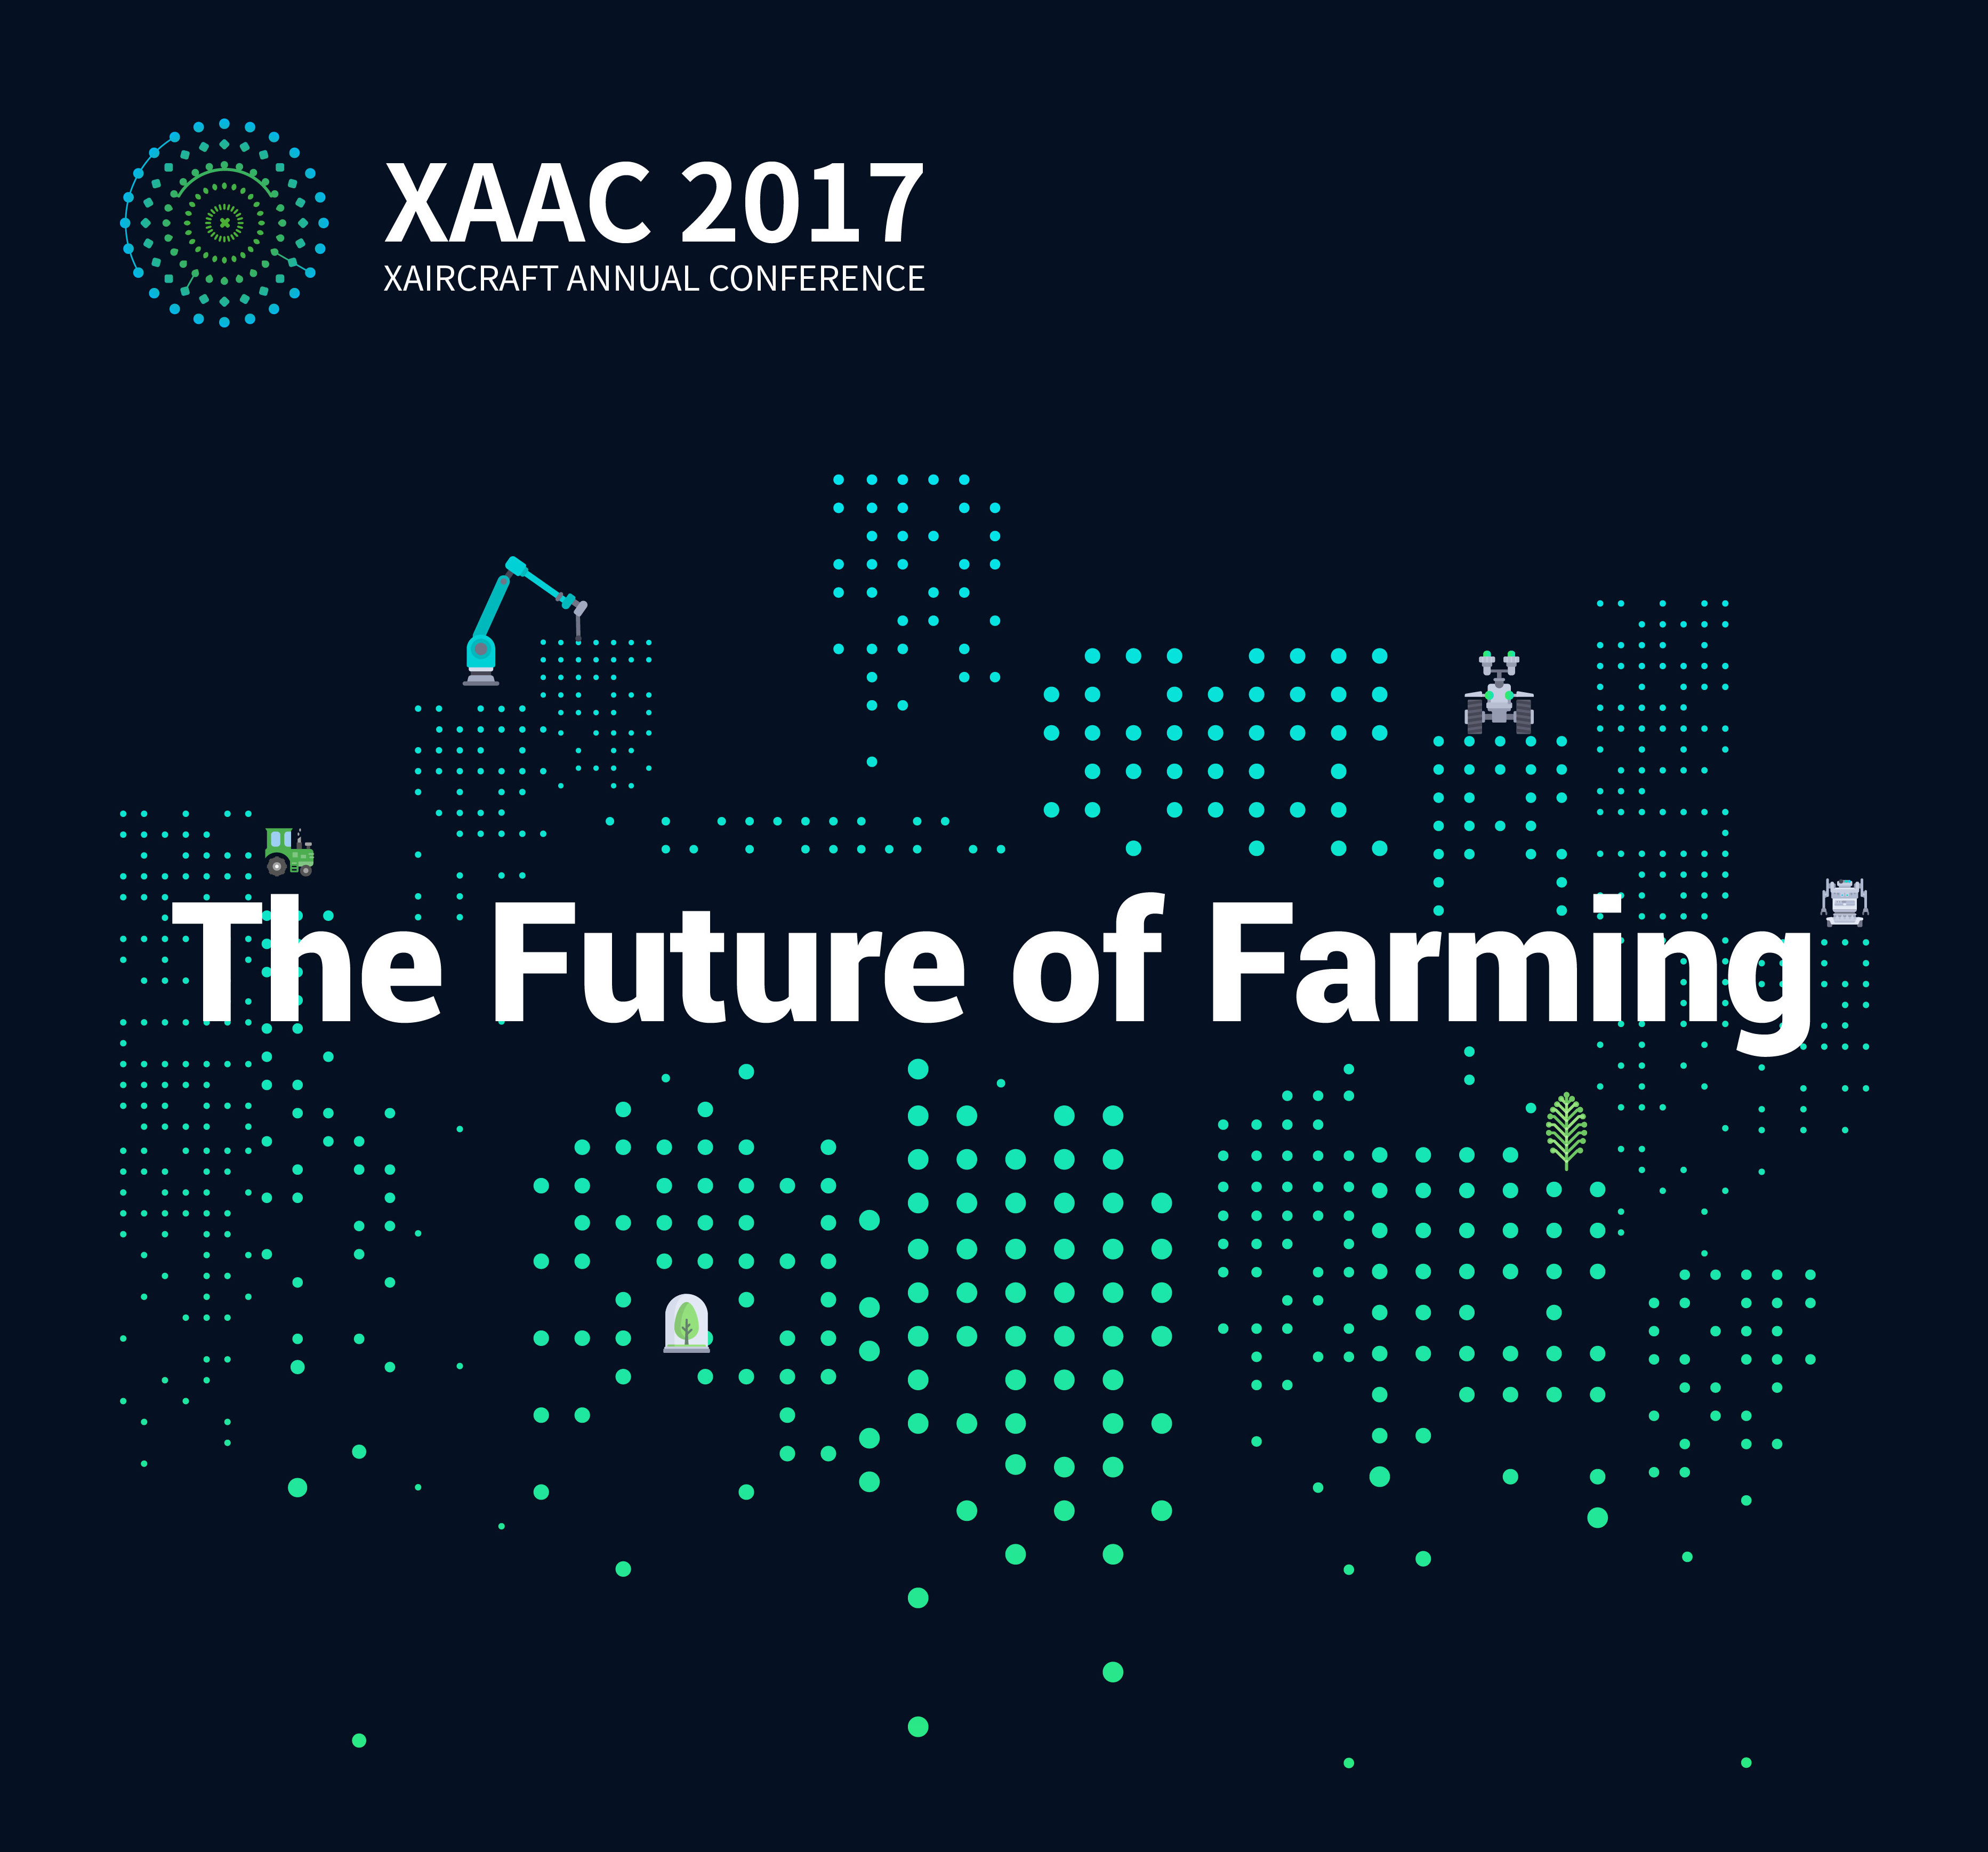 XAAC 2017 The Future of Farming - XAG